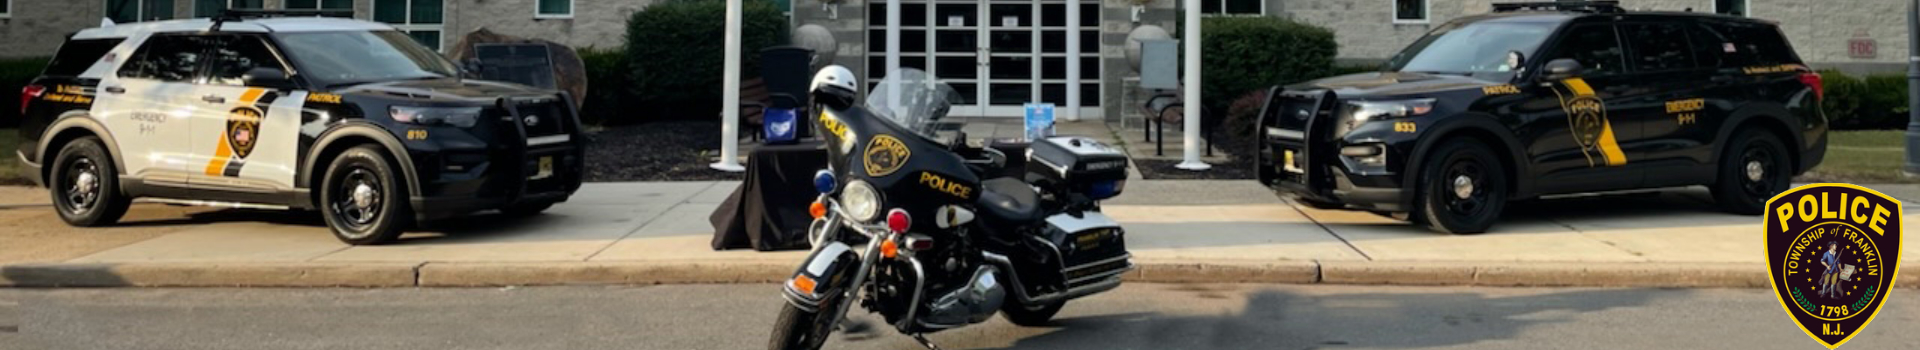 Franklin Township Police Department (Somerset, NJ), NJ Police Jobs